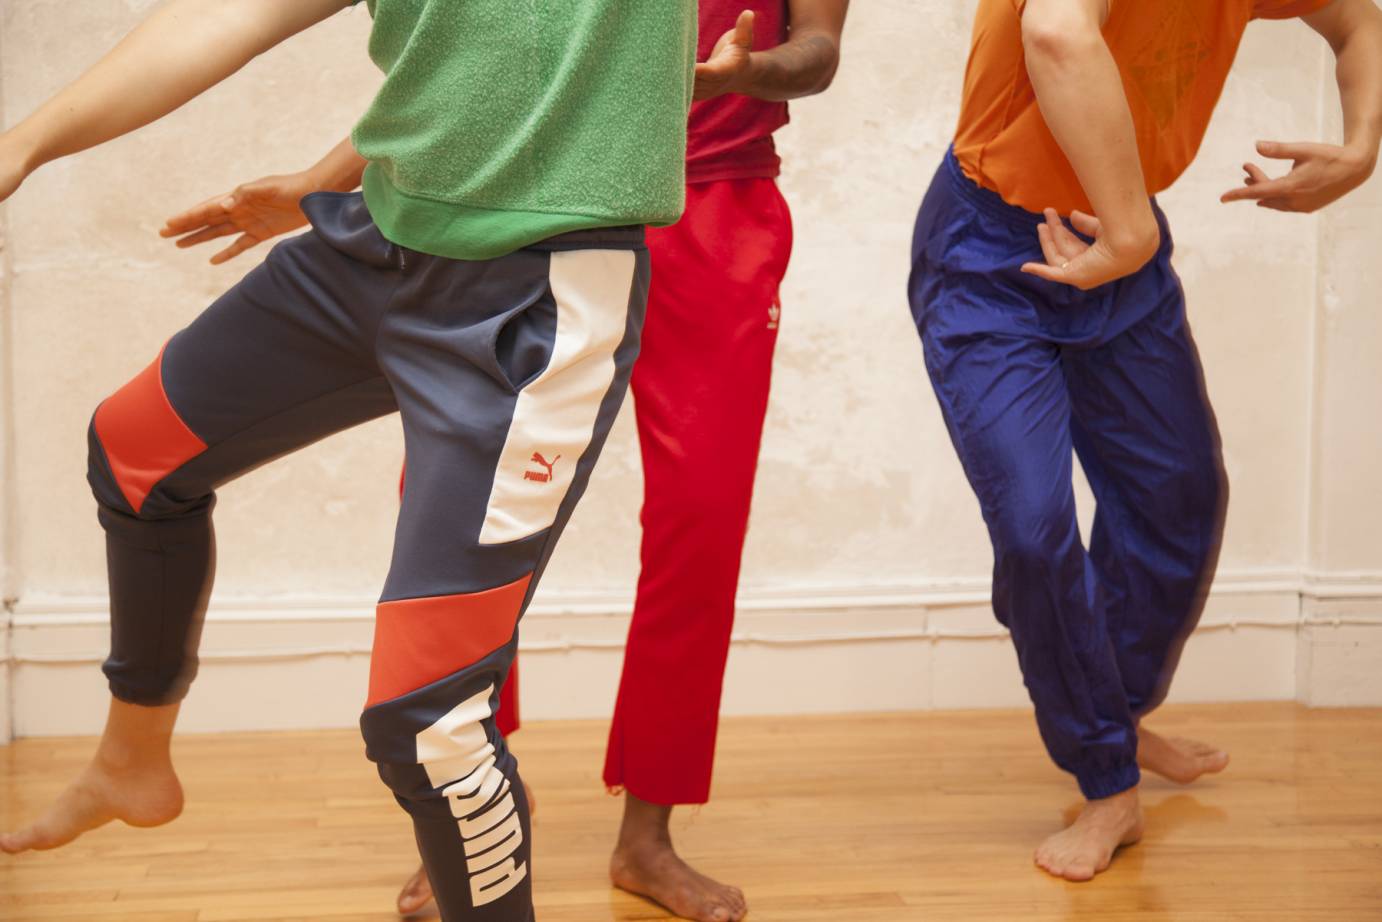 Legs of dancers in colorful pants